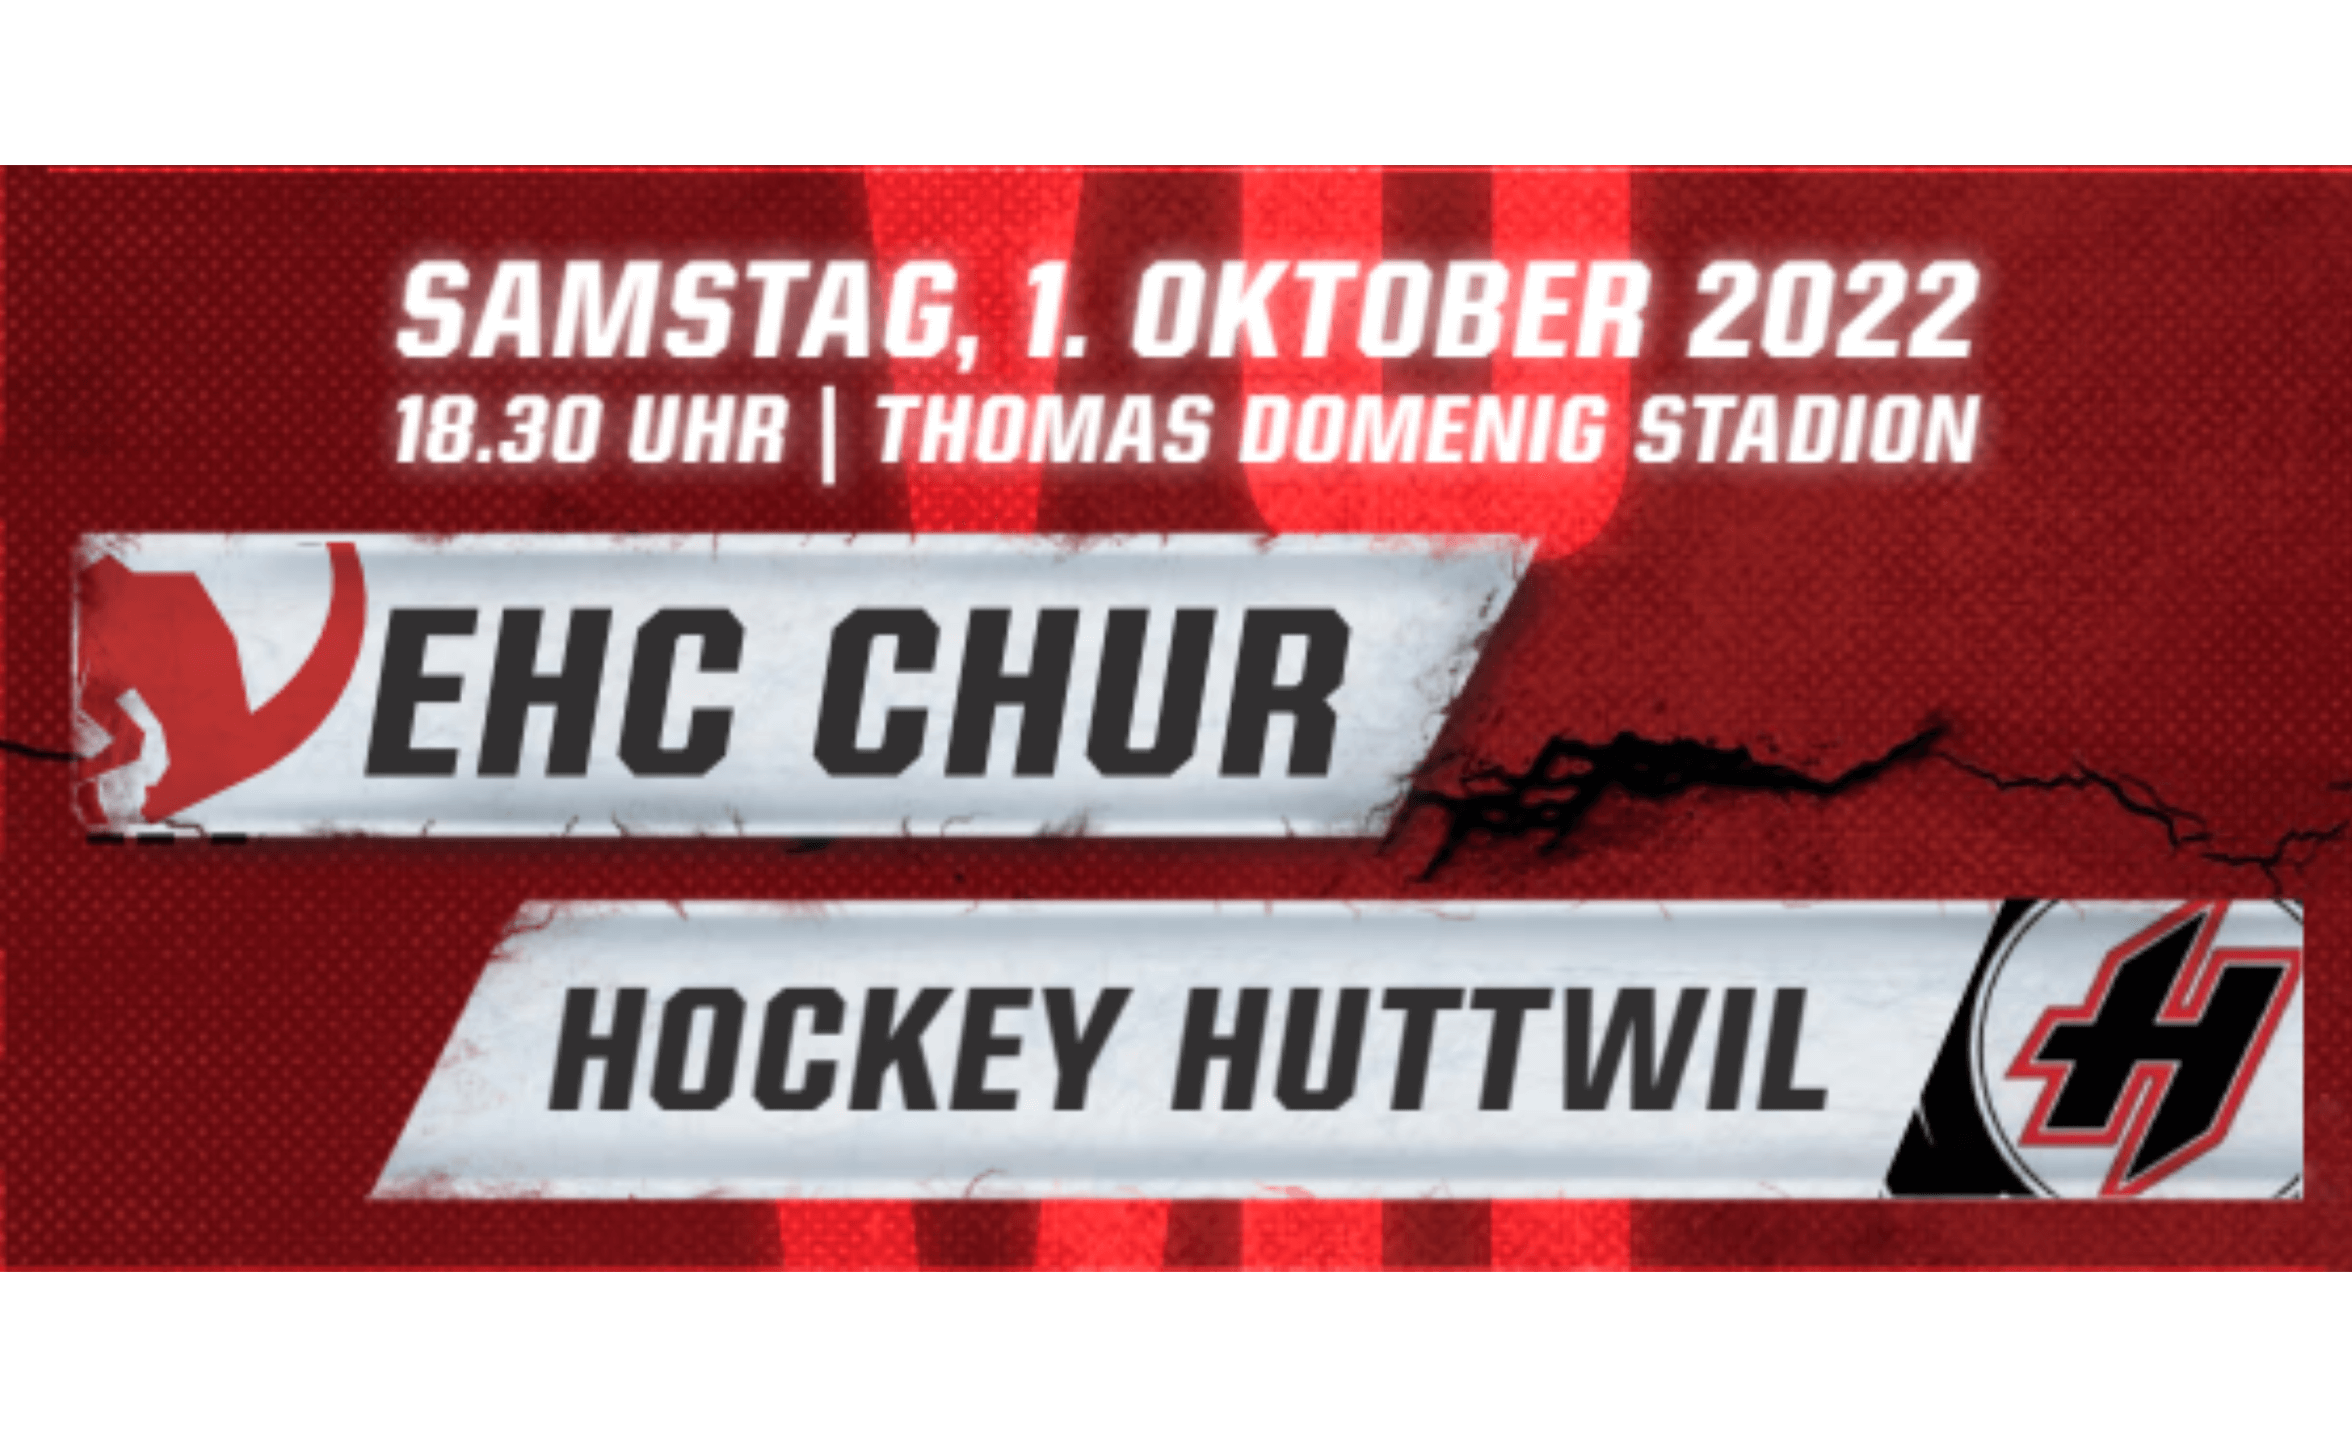 Event-Image for 'EHC Chur vs Hockey Huttwil'